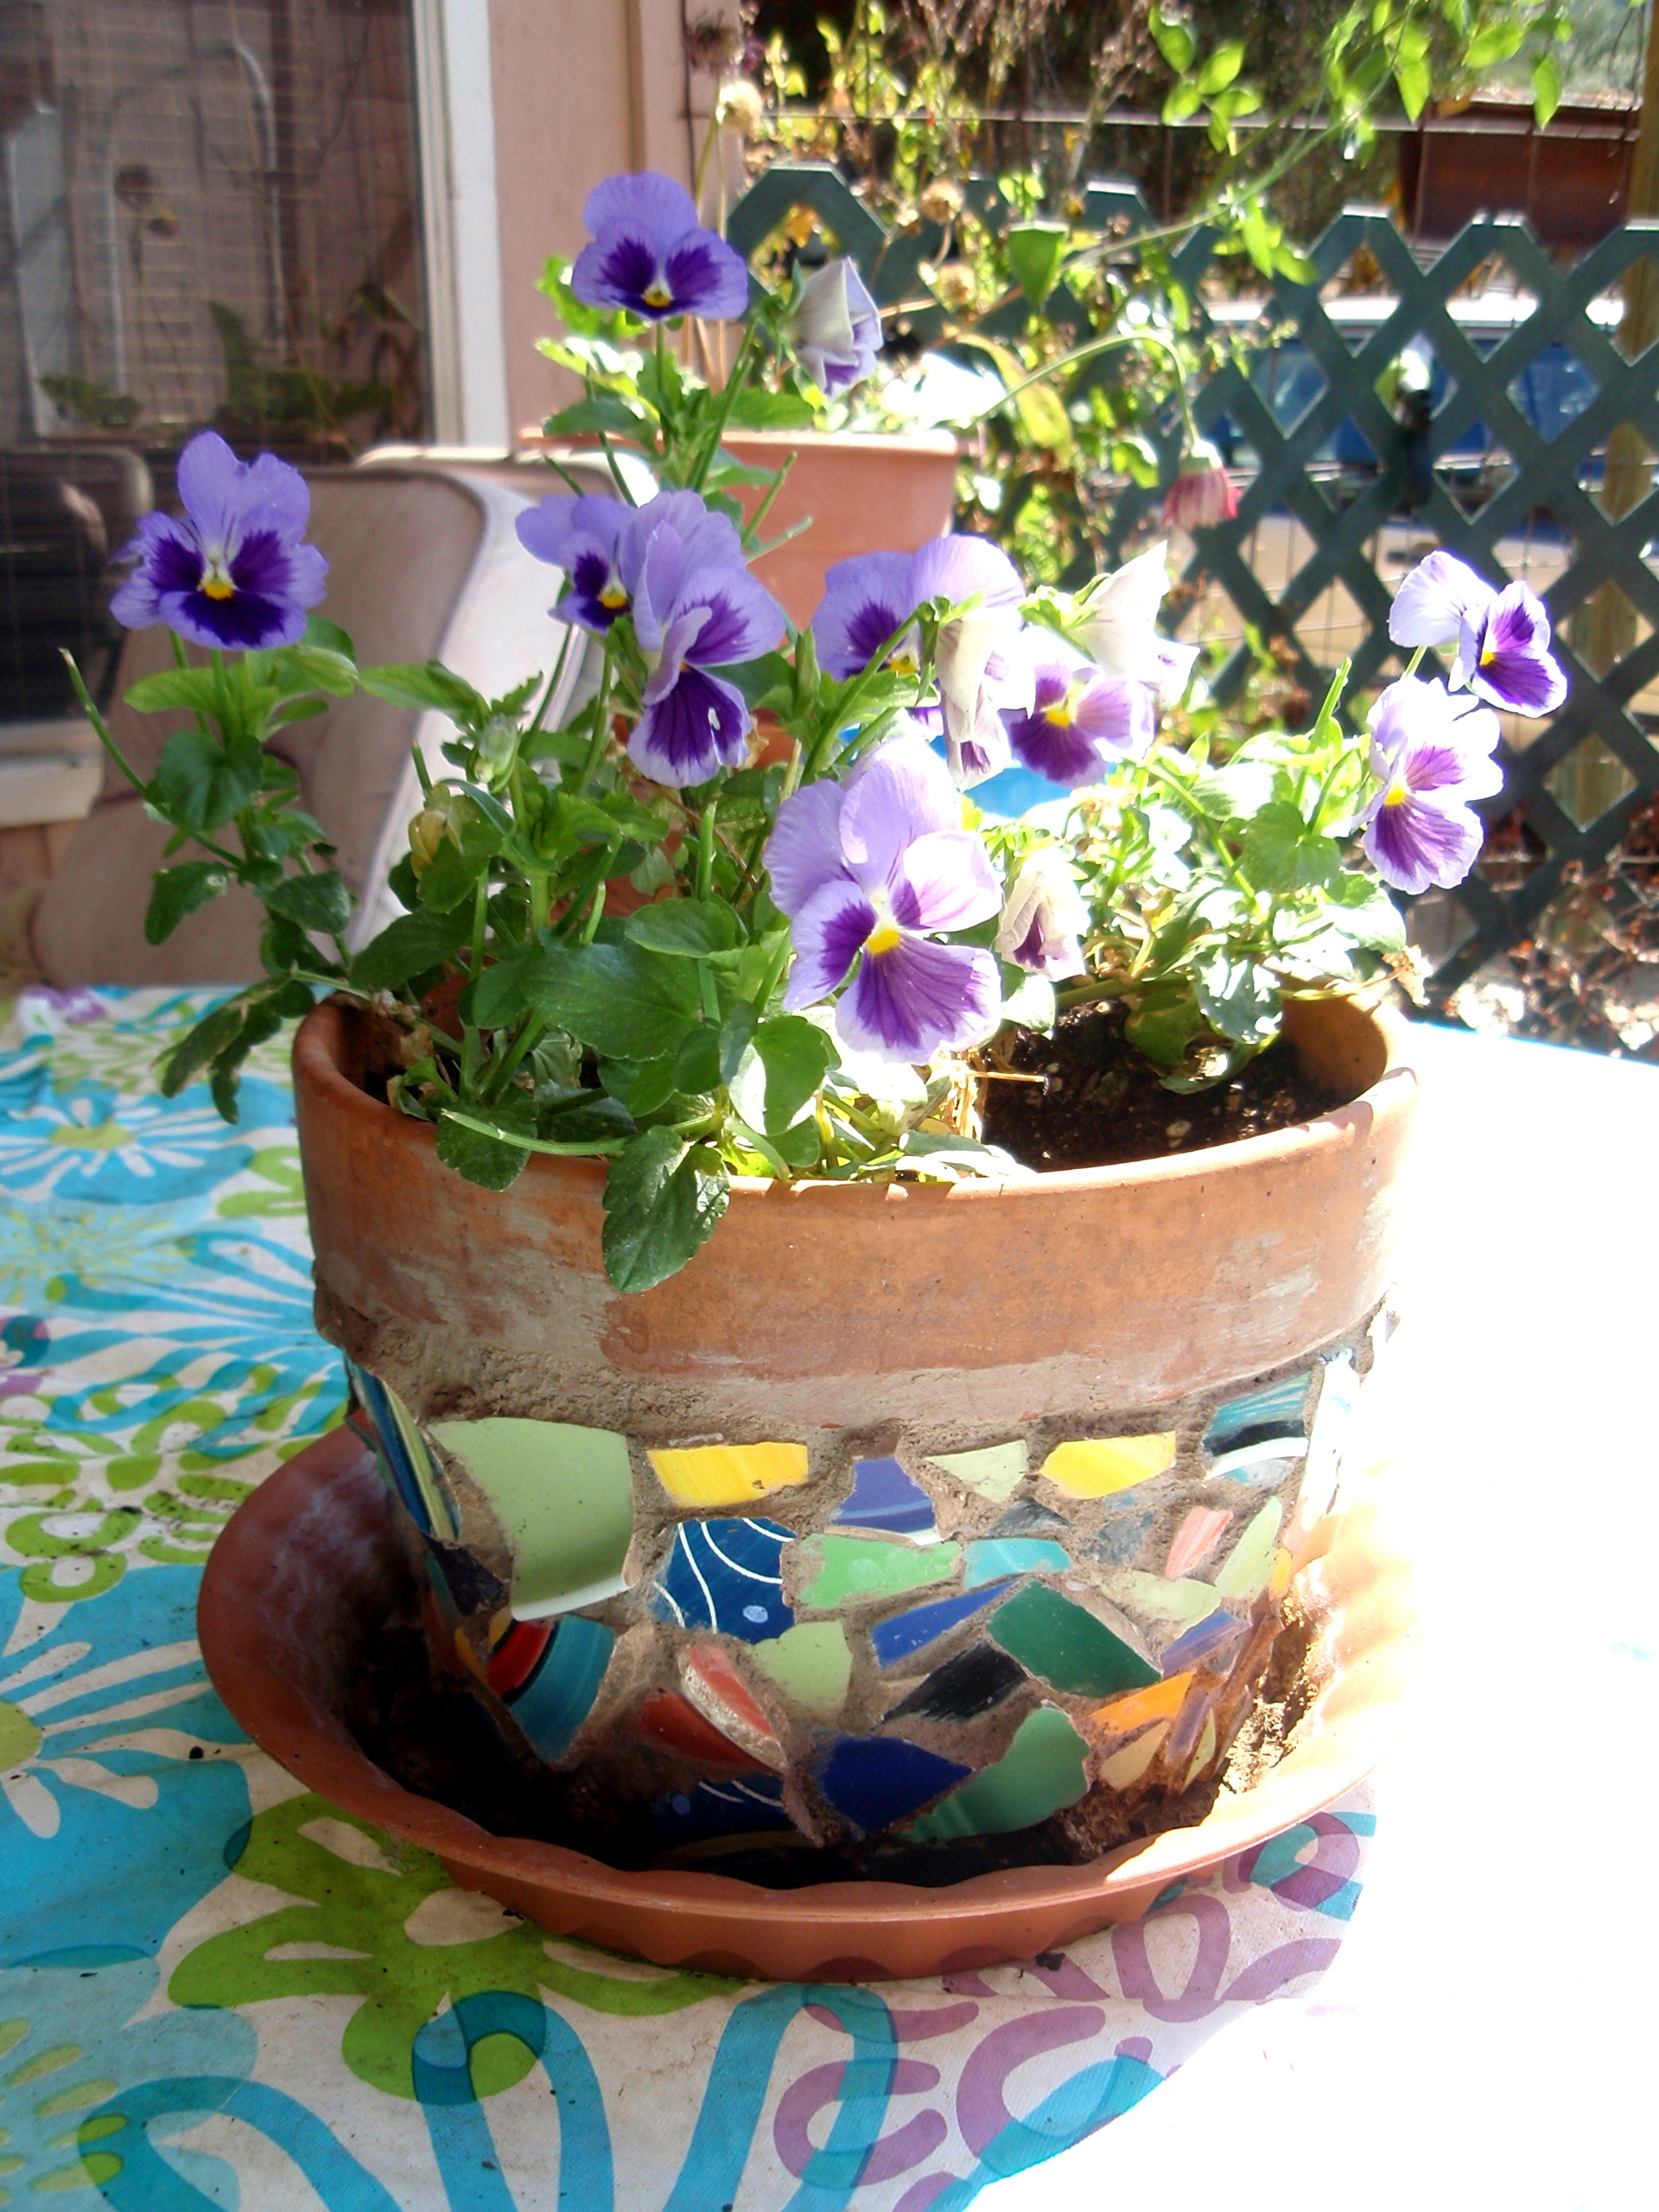 Best ideas about DIY Flower Pots
. Save or Pin DIY Mosaic Flower Pot Centerpieces Now.